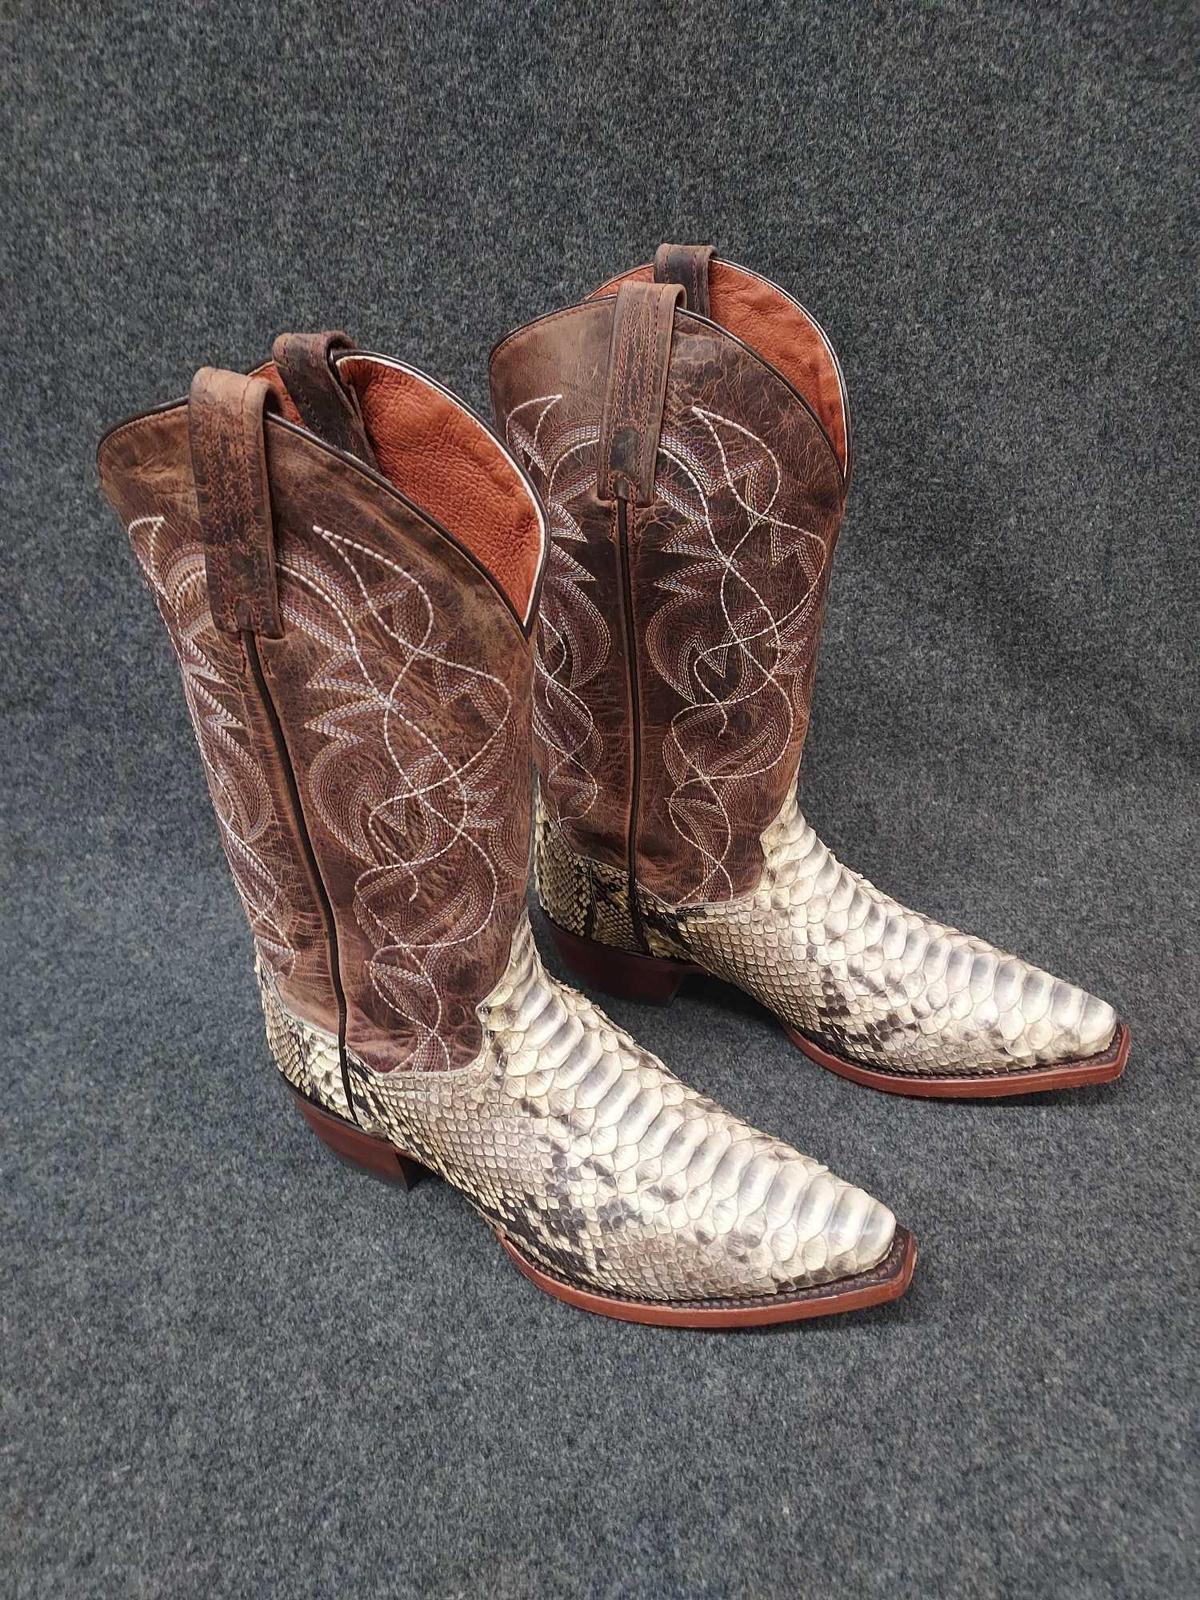 Mens Size 8 EW Dan Post Leather Cowboy Boots